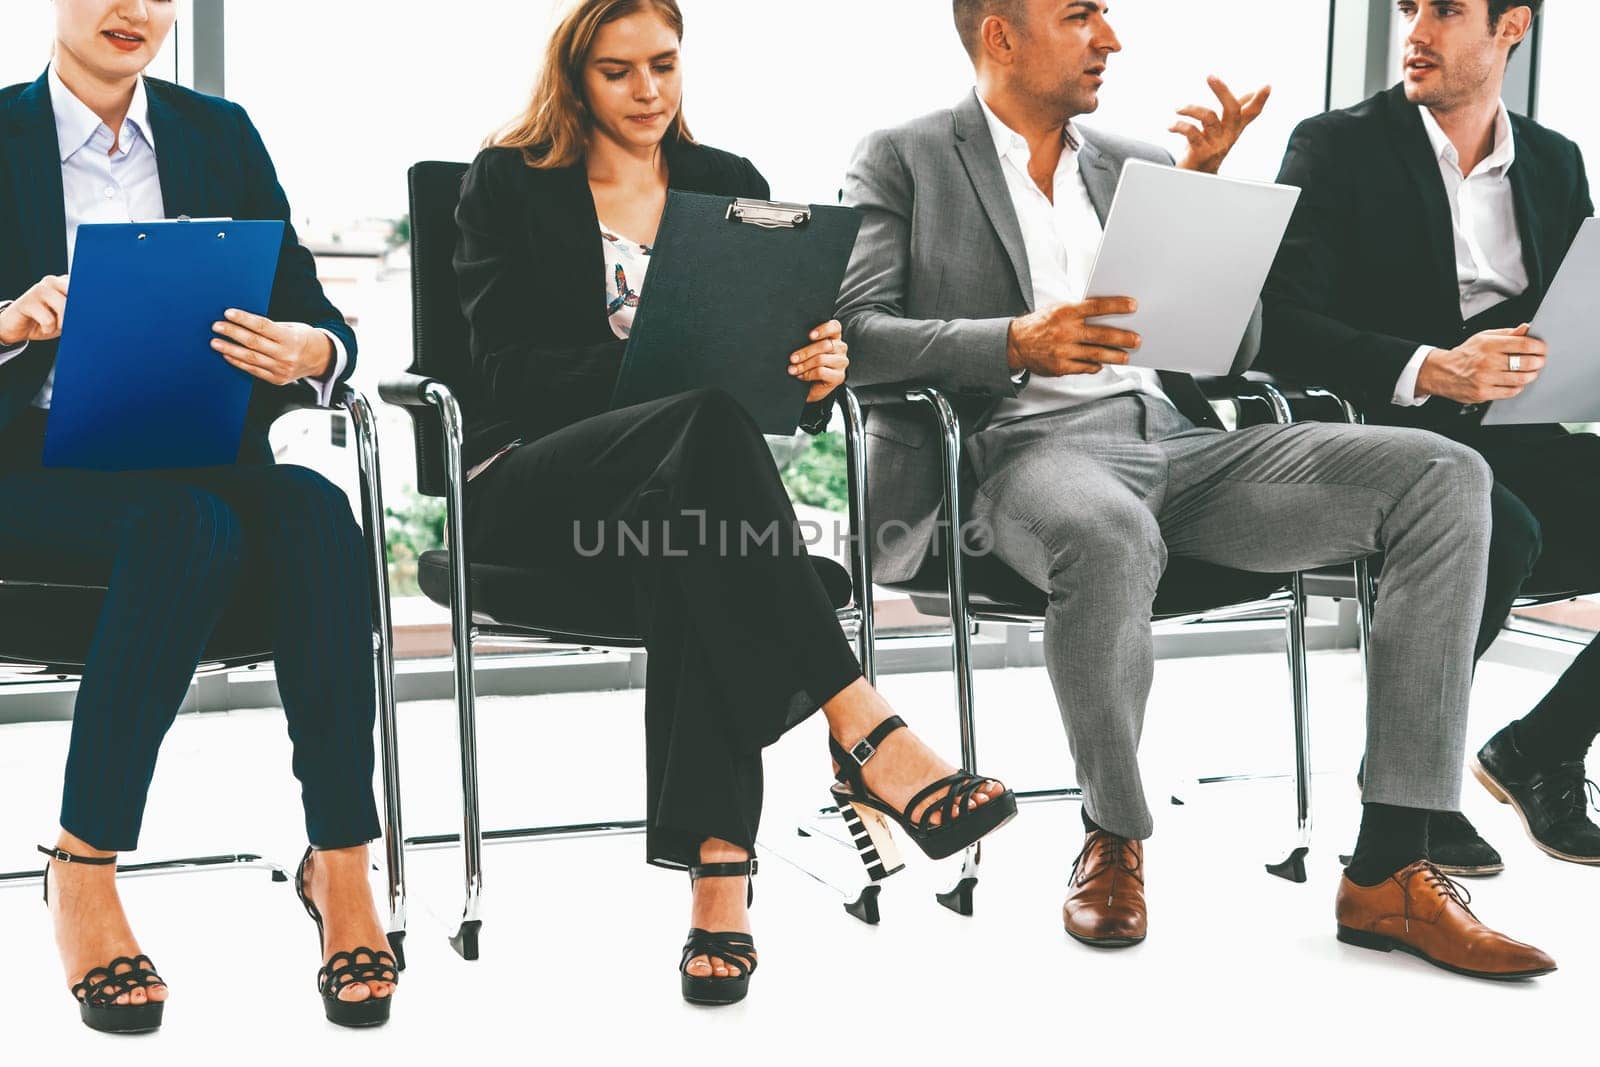 Businesswomen and businessmen wait for interview. uds by biancoblue